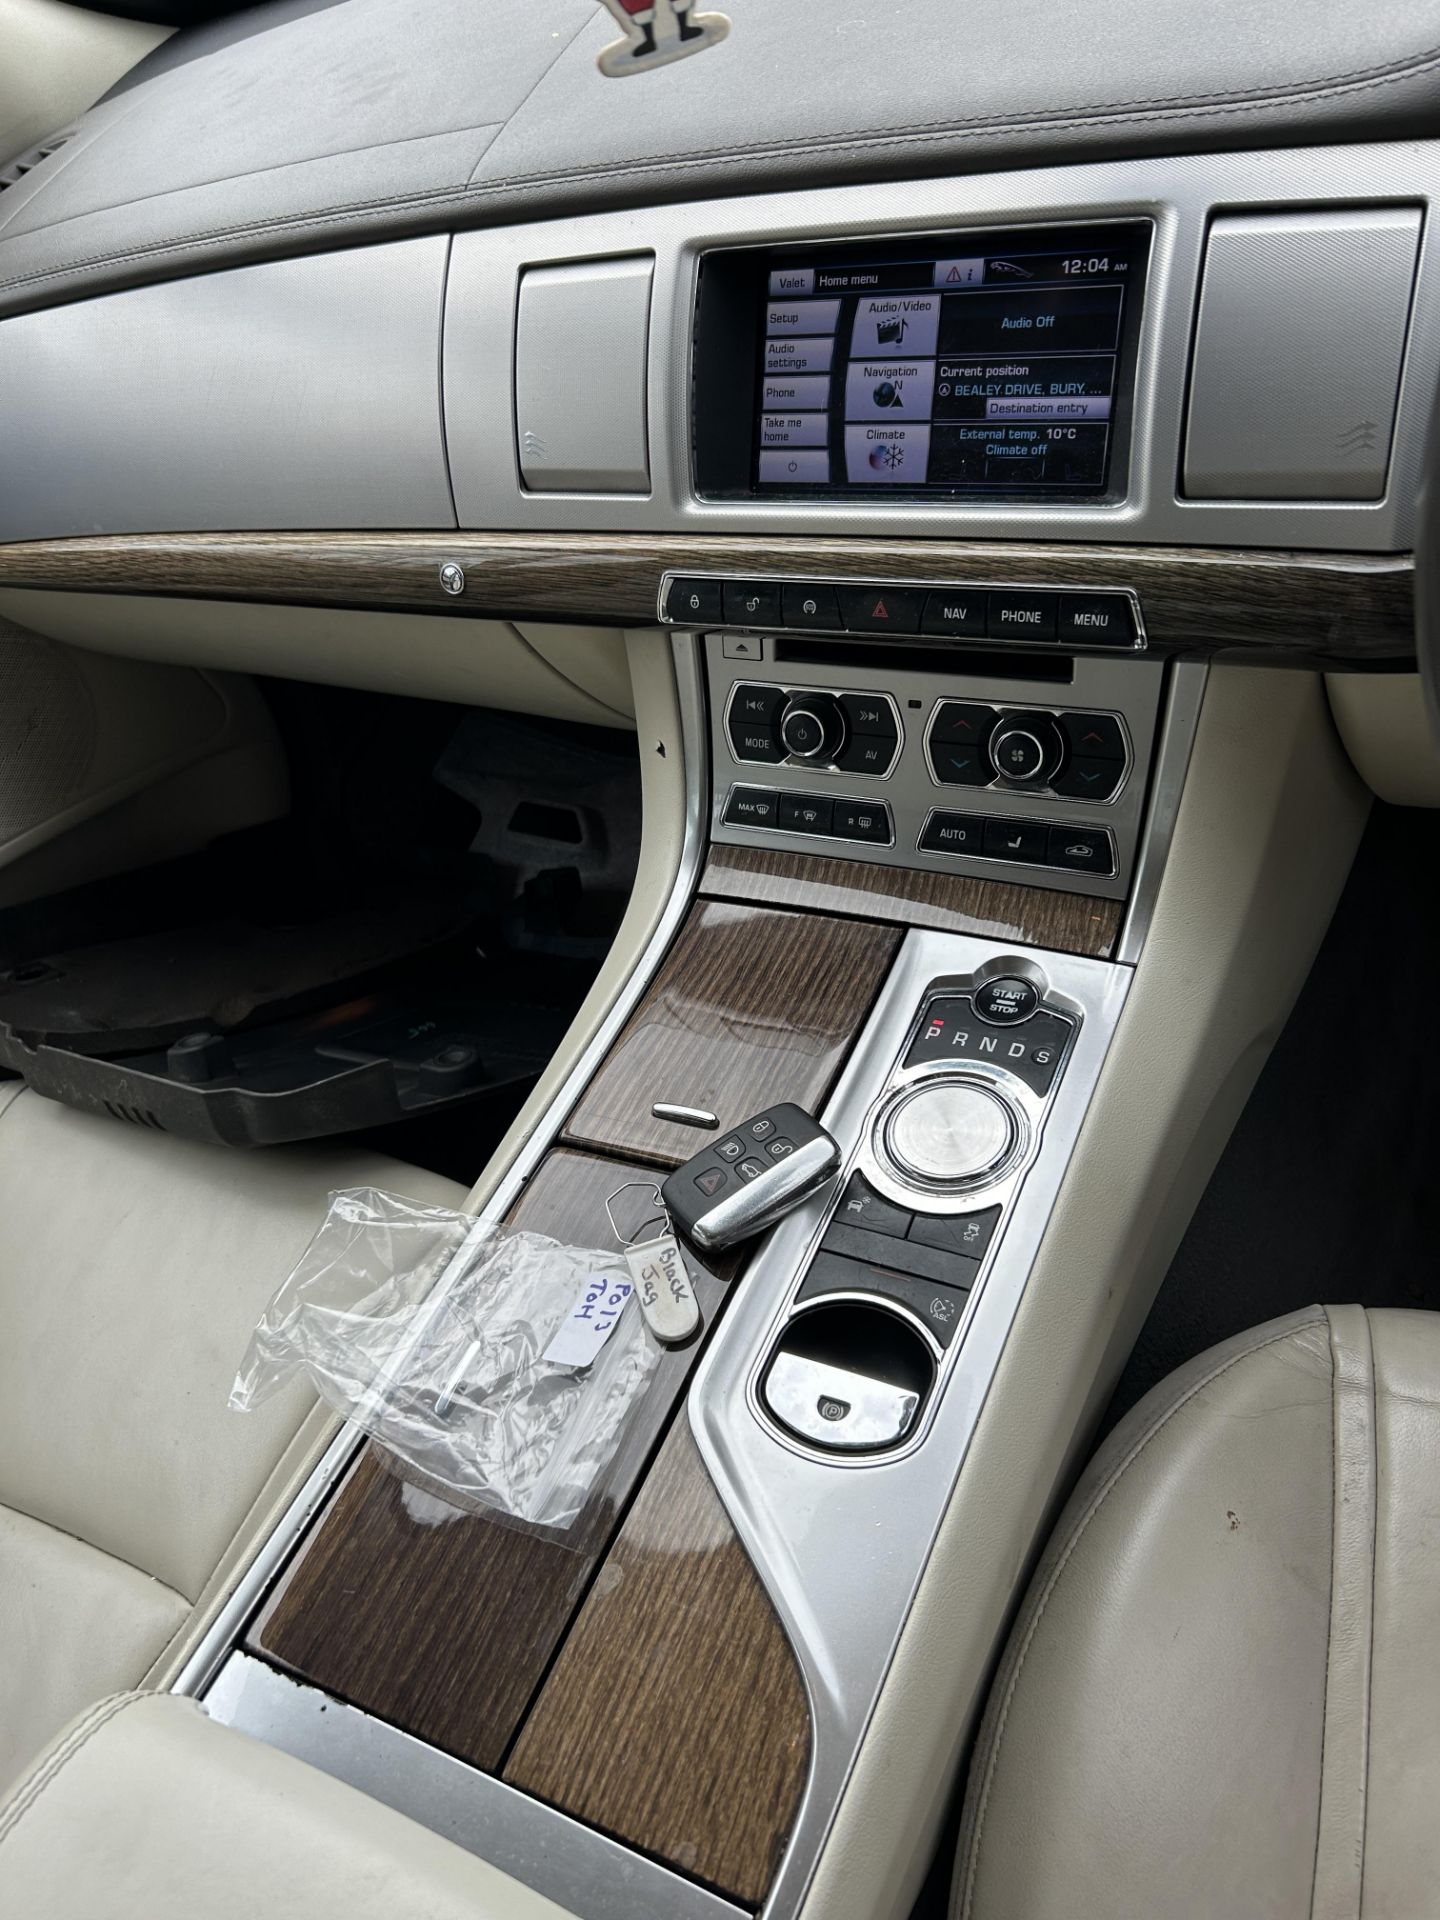 Jaguar XF Premium Luxury D Auto Diesel 4 Door Saloon | PO13 TOH | 165,697 Miles - Image 7 of 9